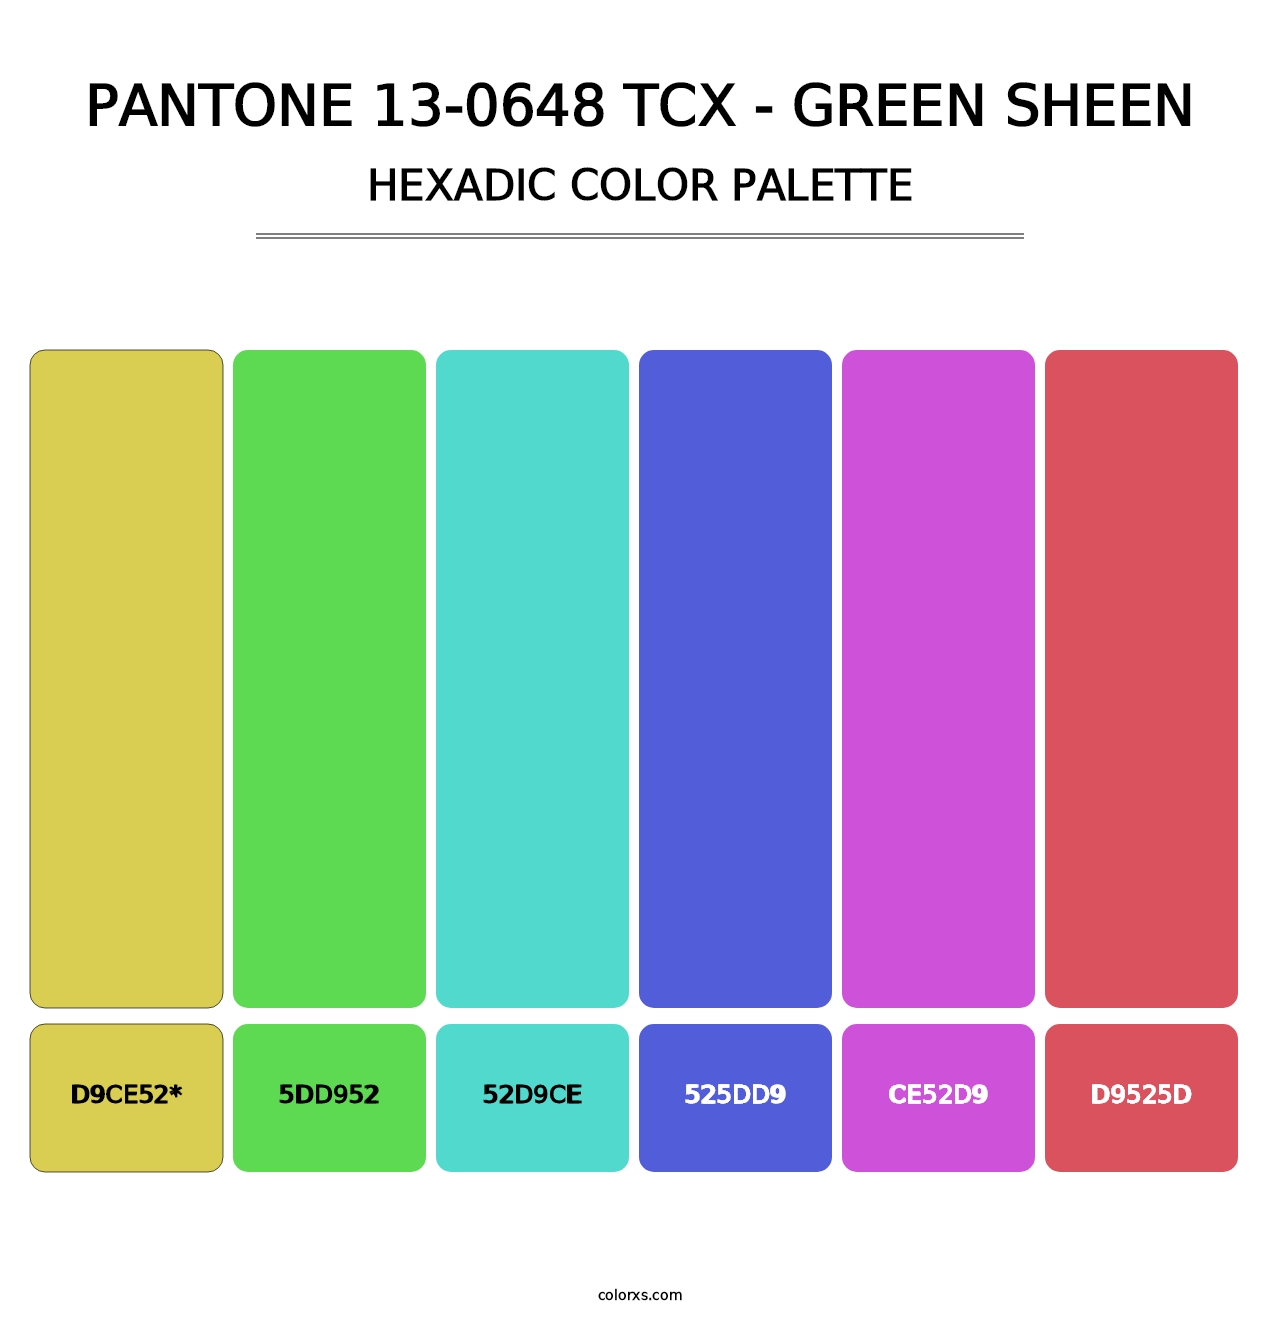 PANTONE 13-0648 TCX - Green Sheen - Hexadic Color Palette